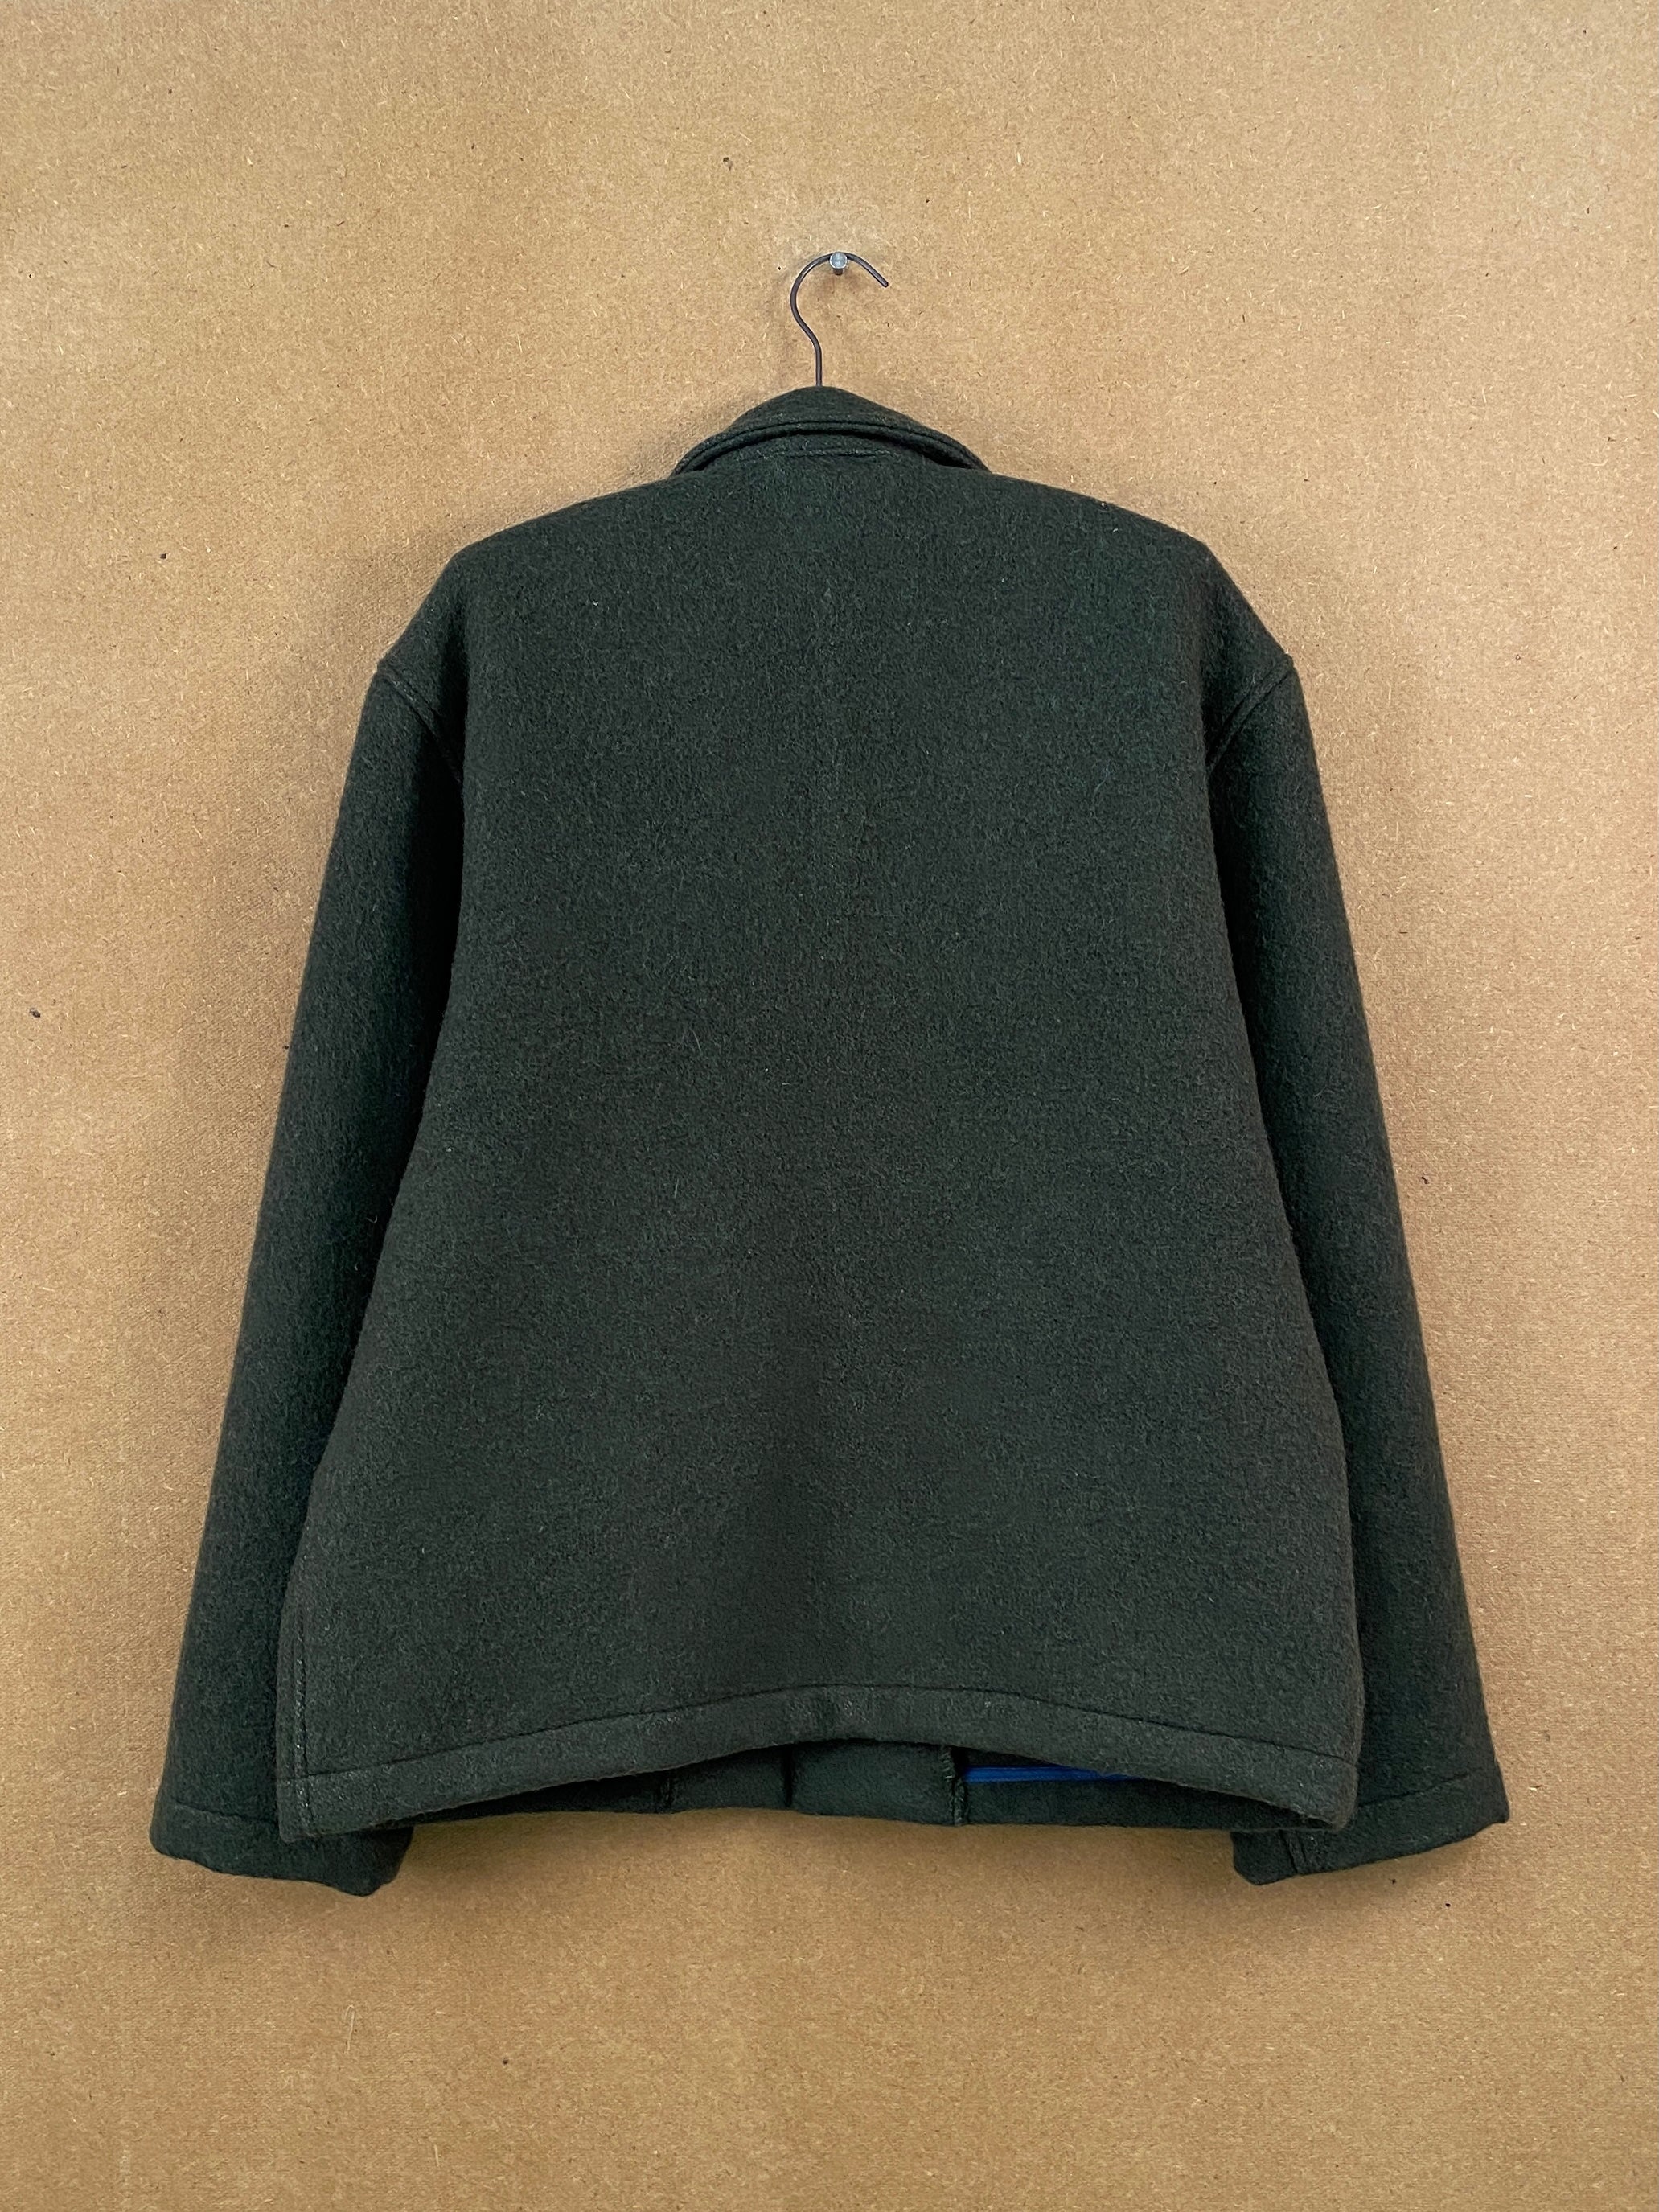 Surplus Blanket Jacket - L/XL